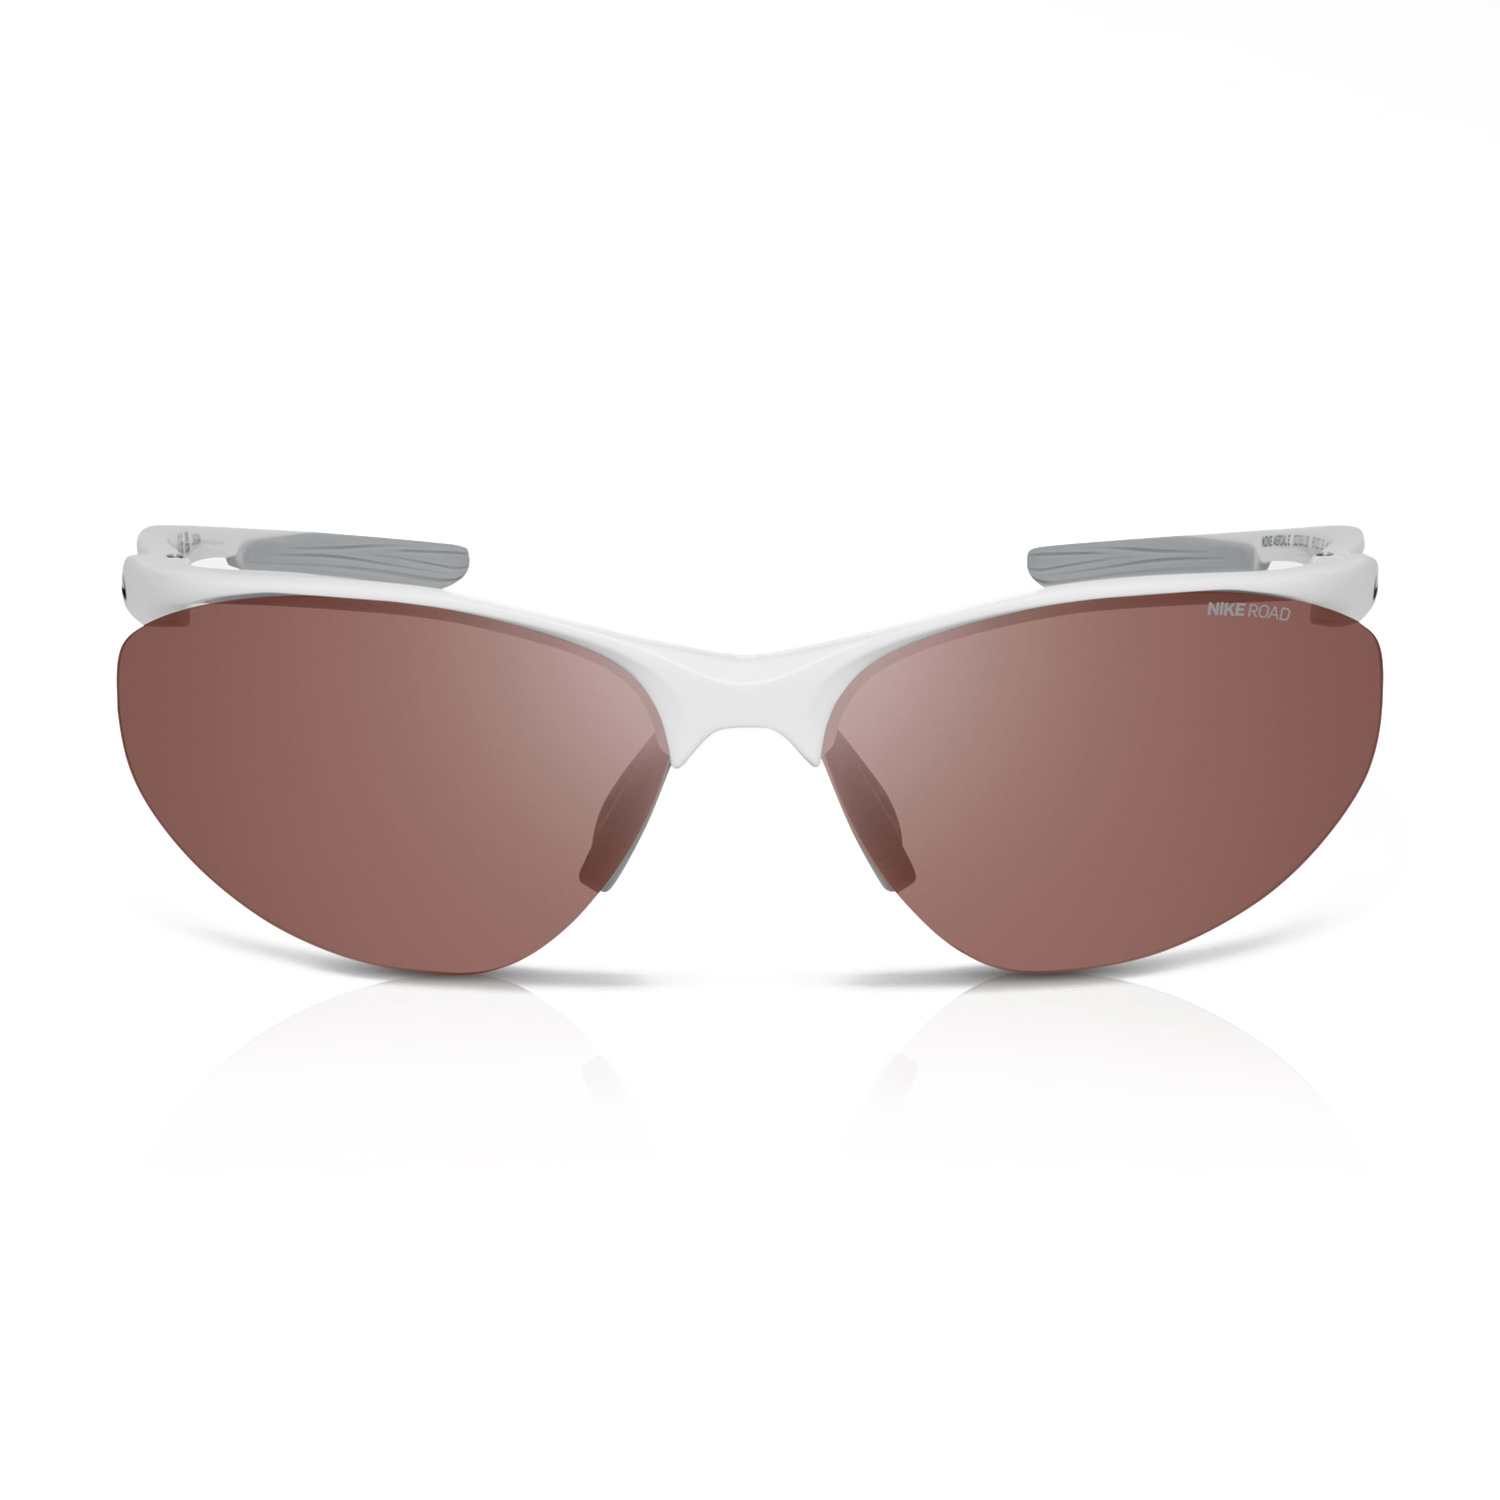 Nike Aerial Road Sunglasses - White/Road Tint